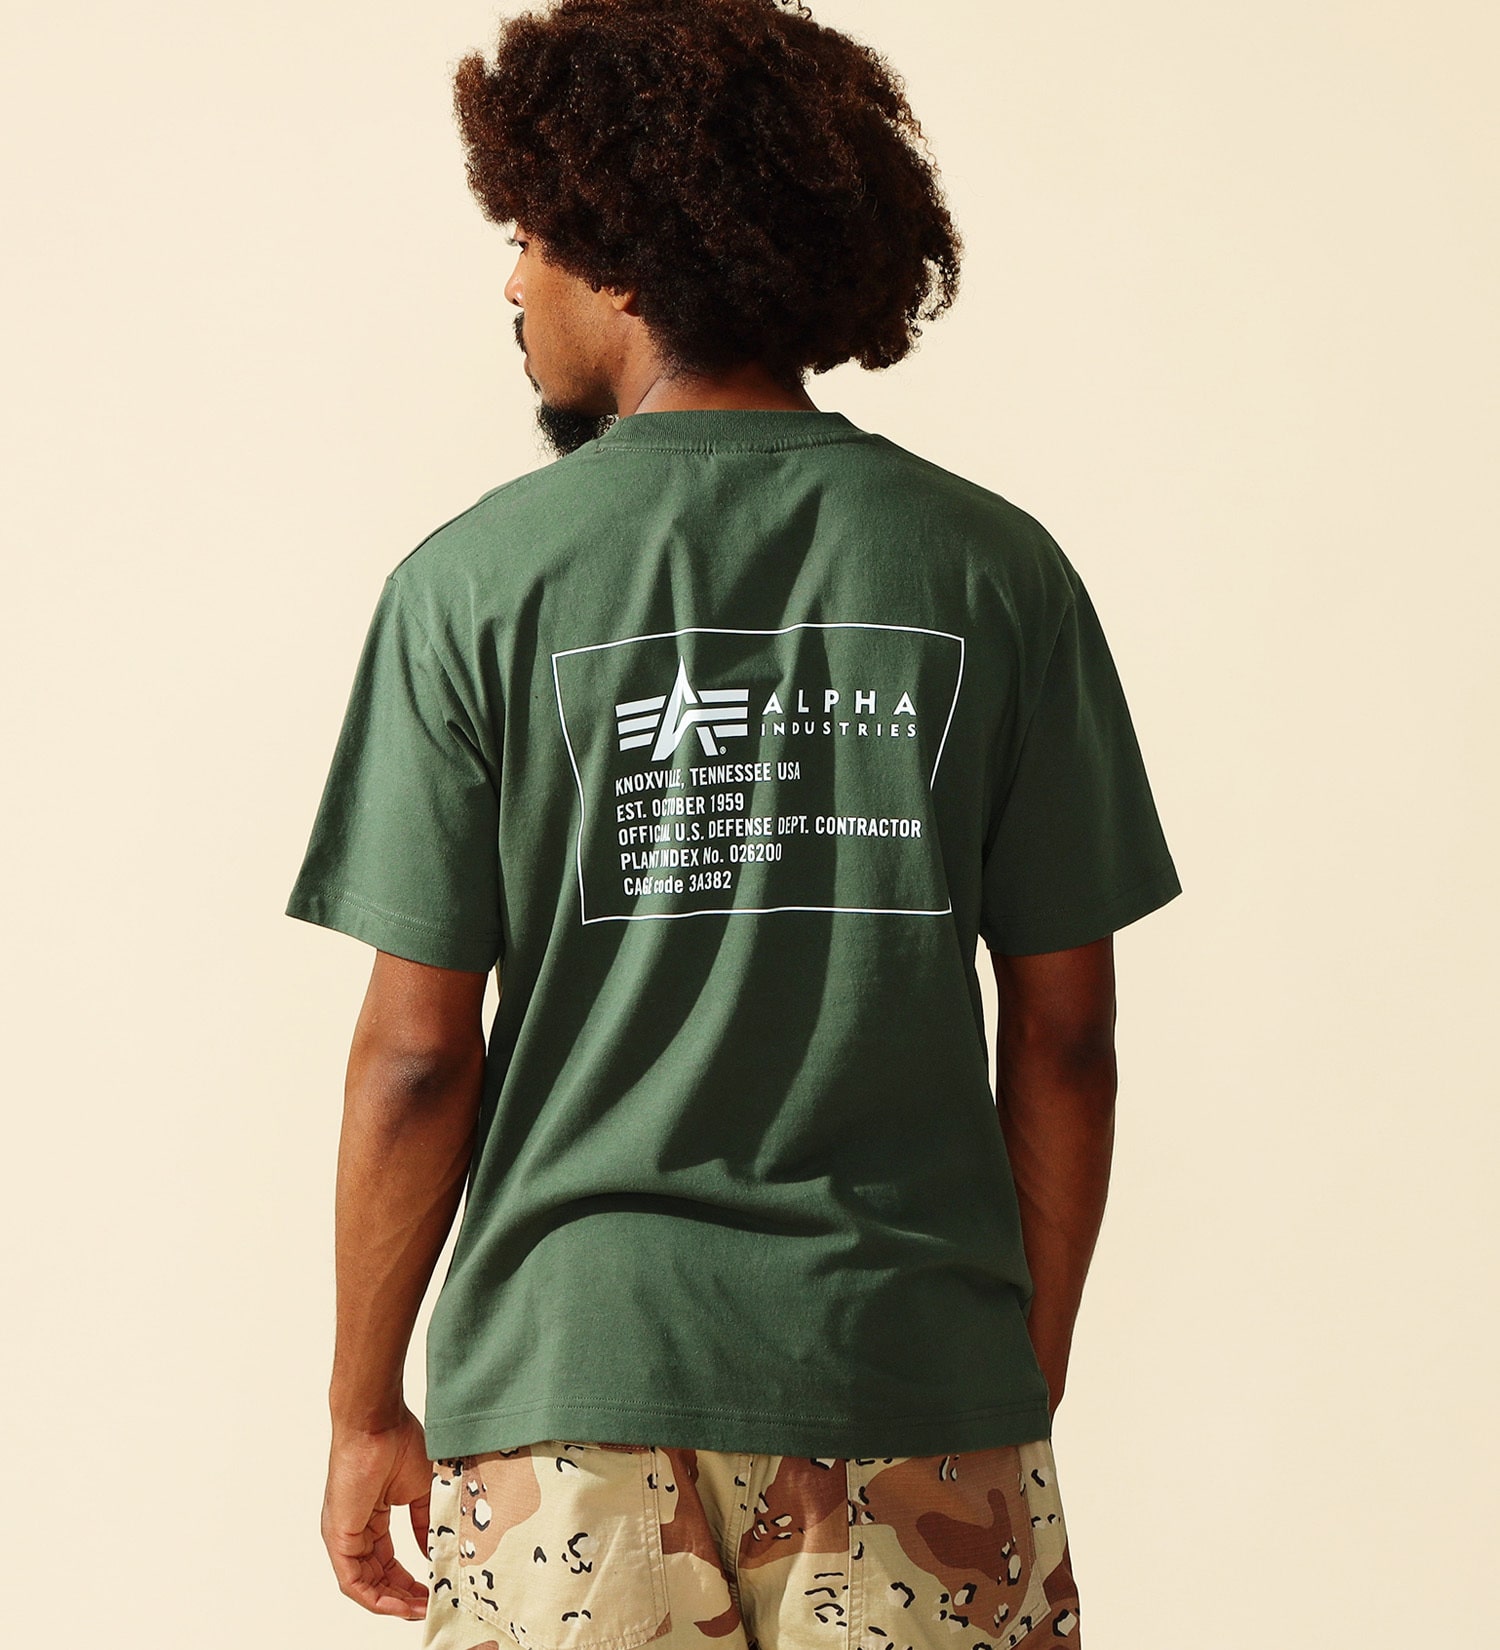 ALPHA(アルファ)のMIL.SPECバックプリントTシャツ 半袖|トップス/Tシャツ/カットソー/メンズ|ダークグリーン